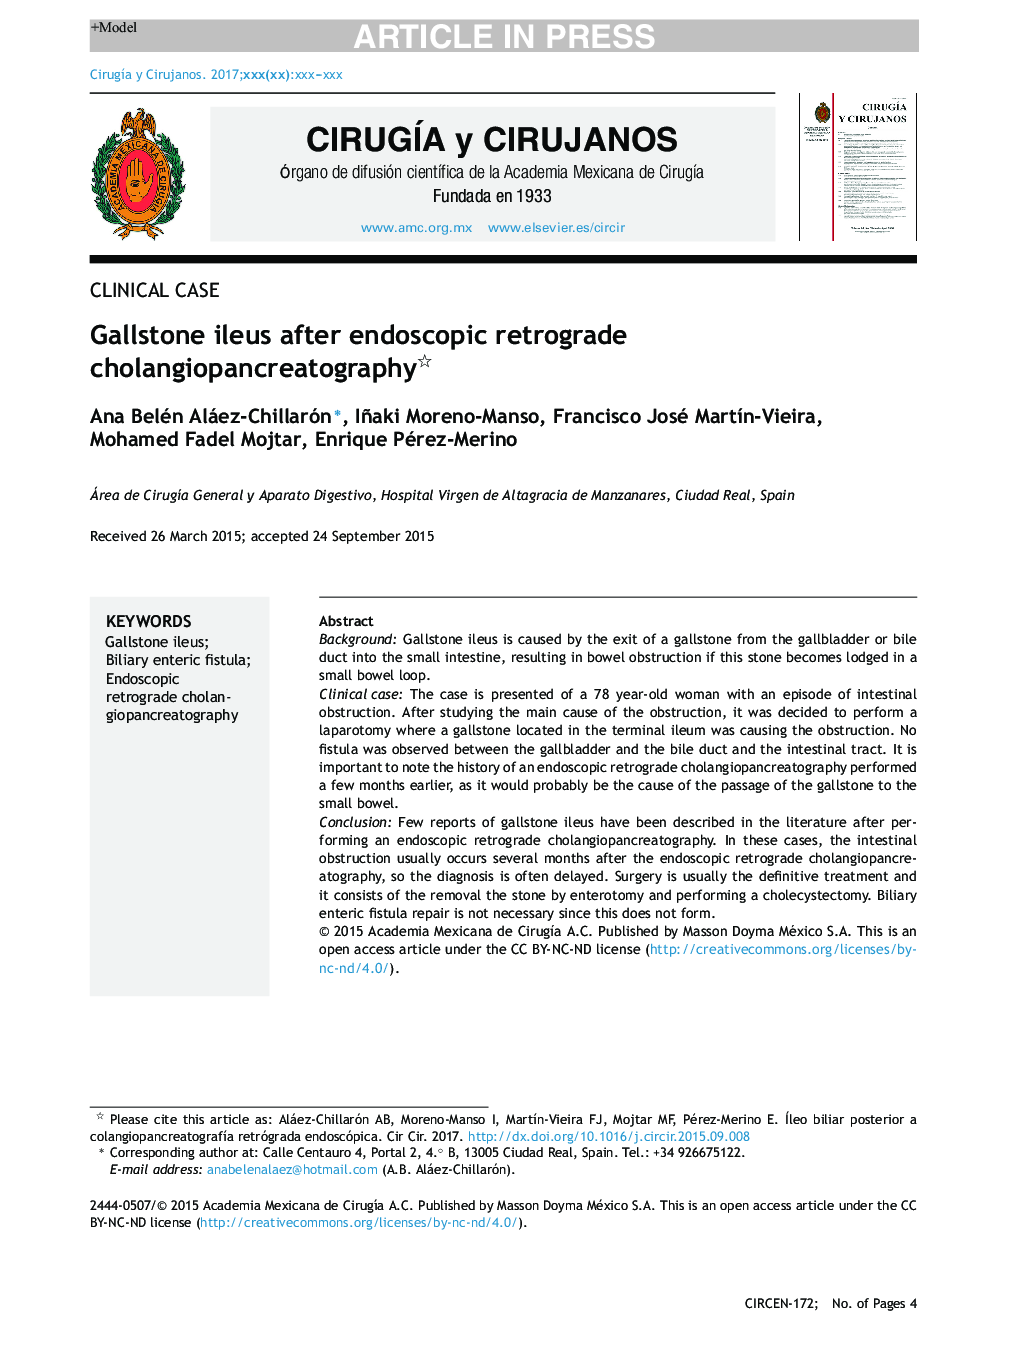 Gallstone ileus after endoscopic retrograde cholangiopancreatography